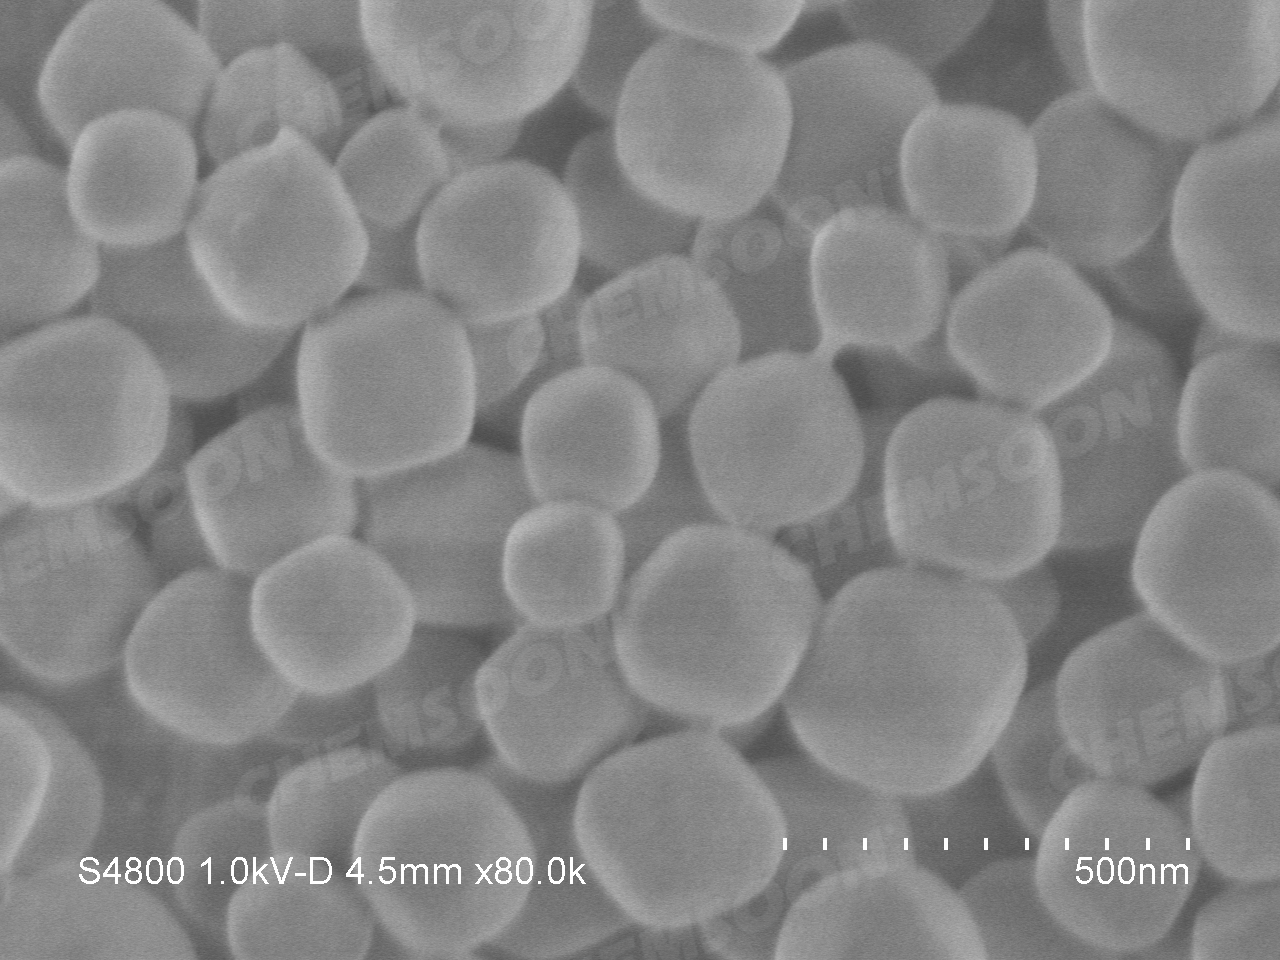 SEM-MOF-801 nanoparticles